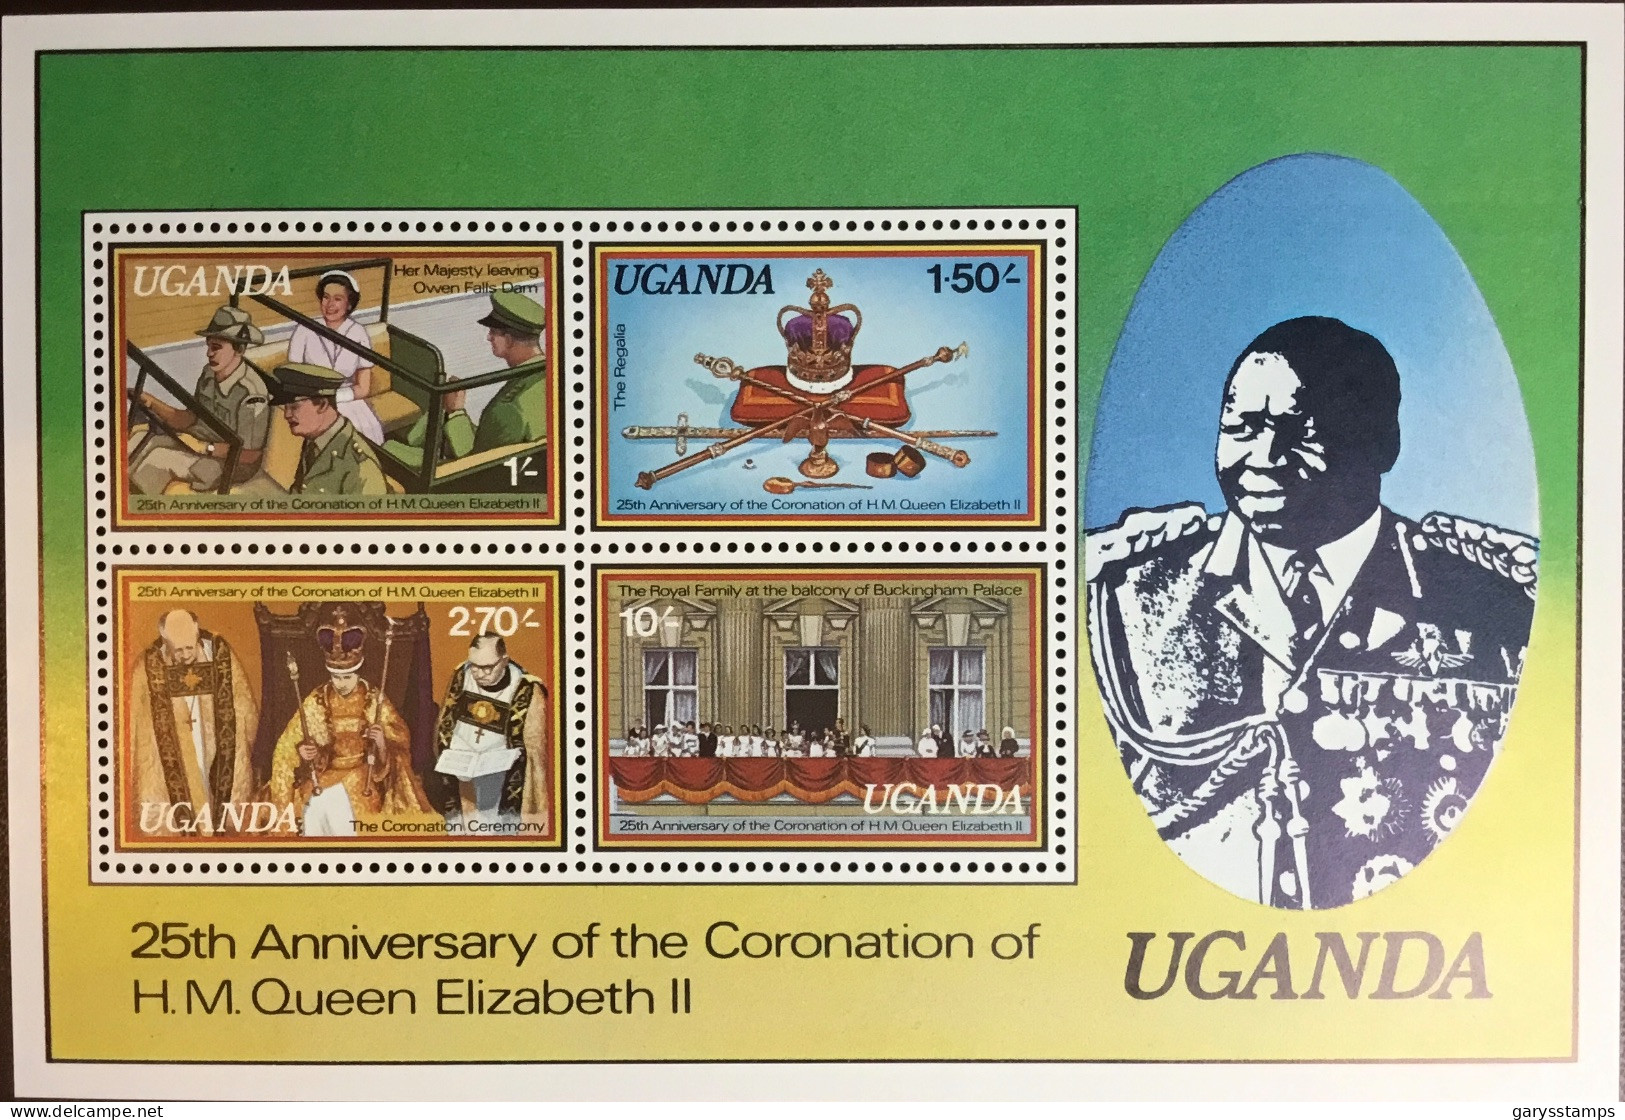 Uganda 1979 Coronation Anniversary Minisheet MNH - Uganda (1962-...)